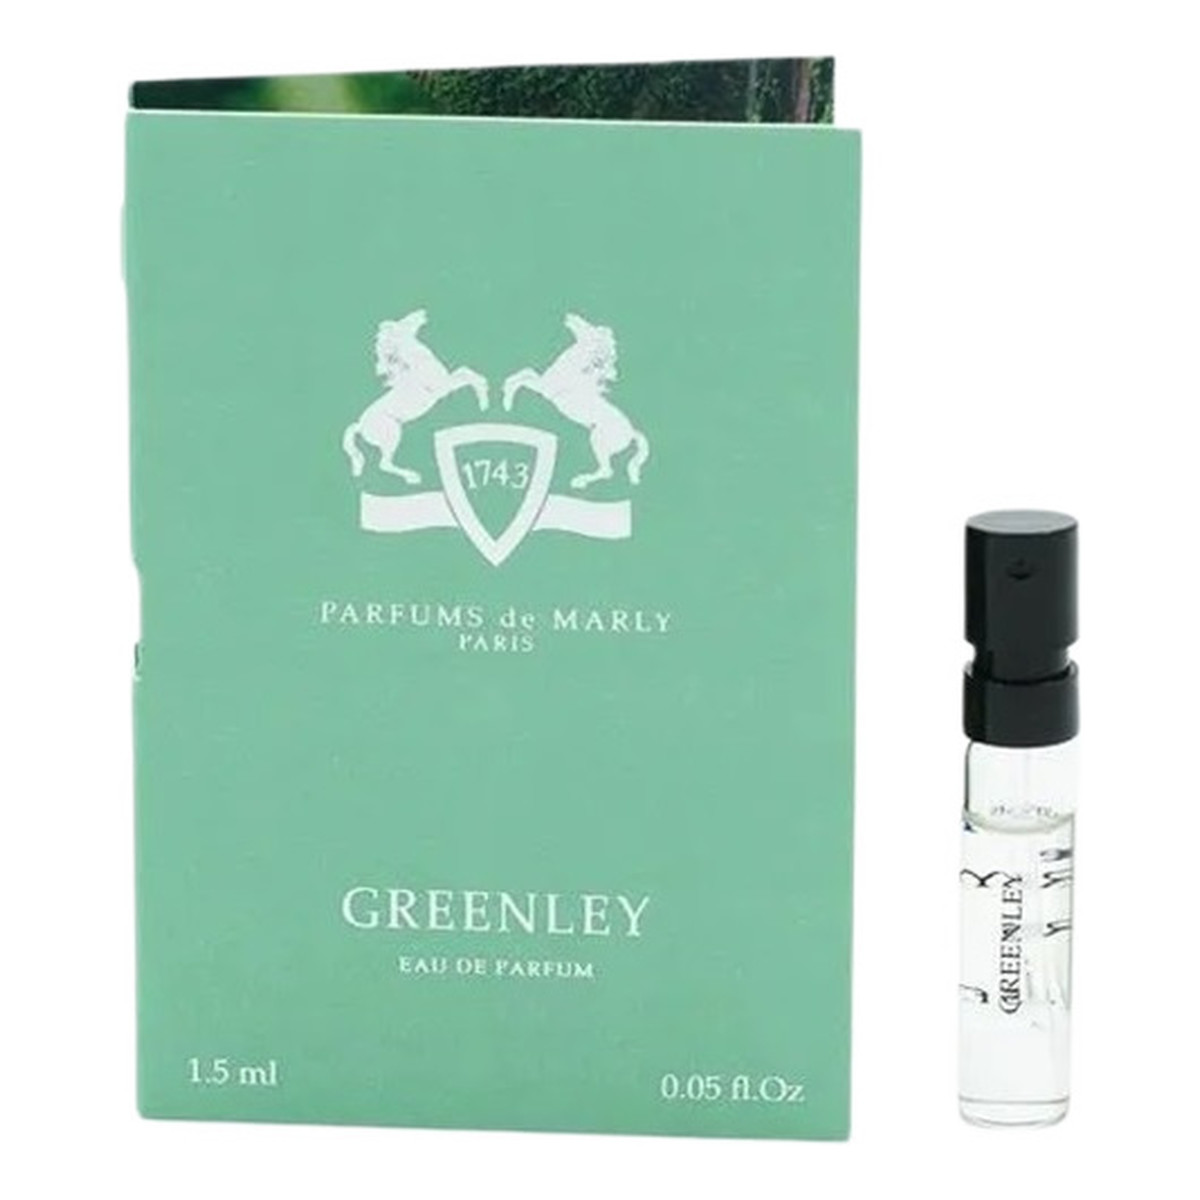 Parfums de Marly Greenley Woda perfumowana spray próbka 1.5ml